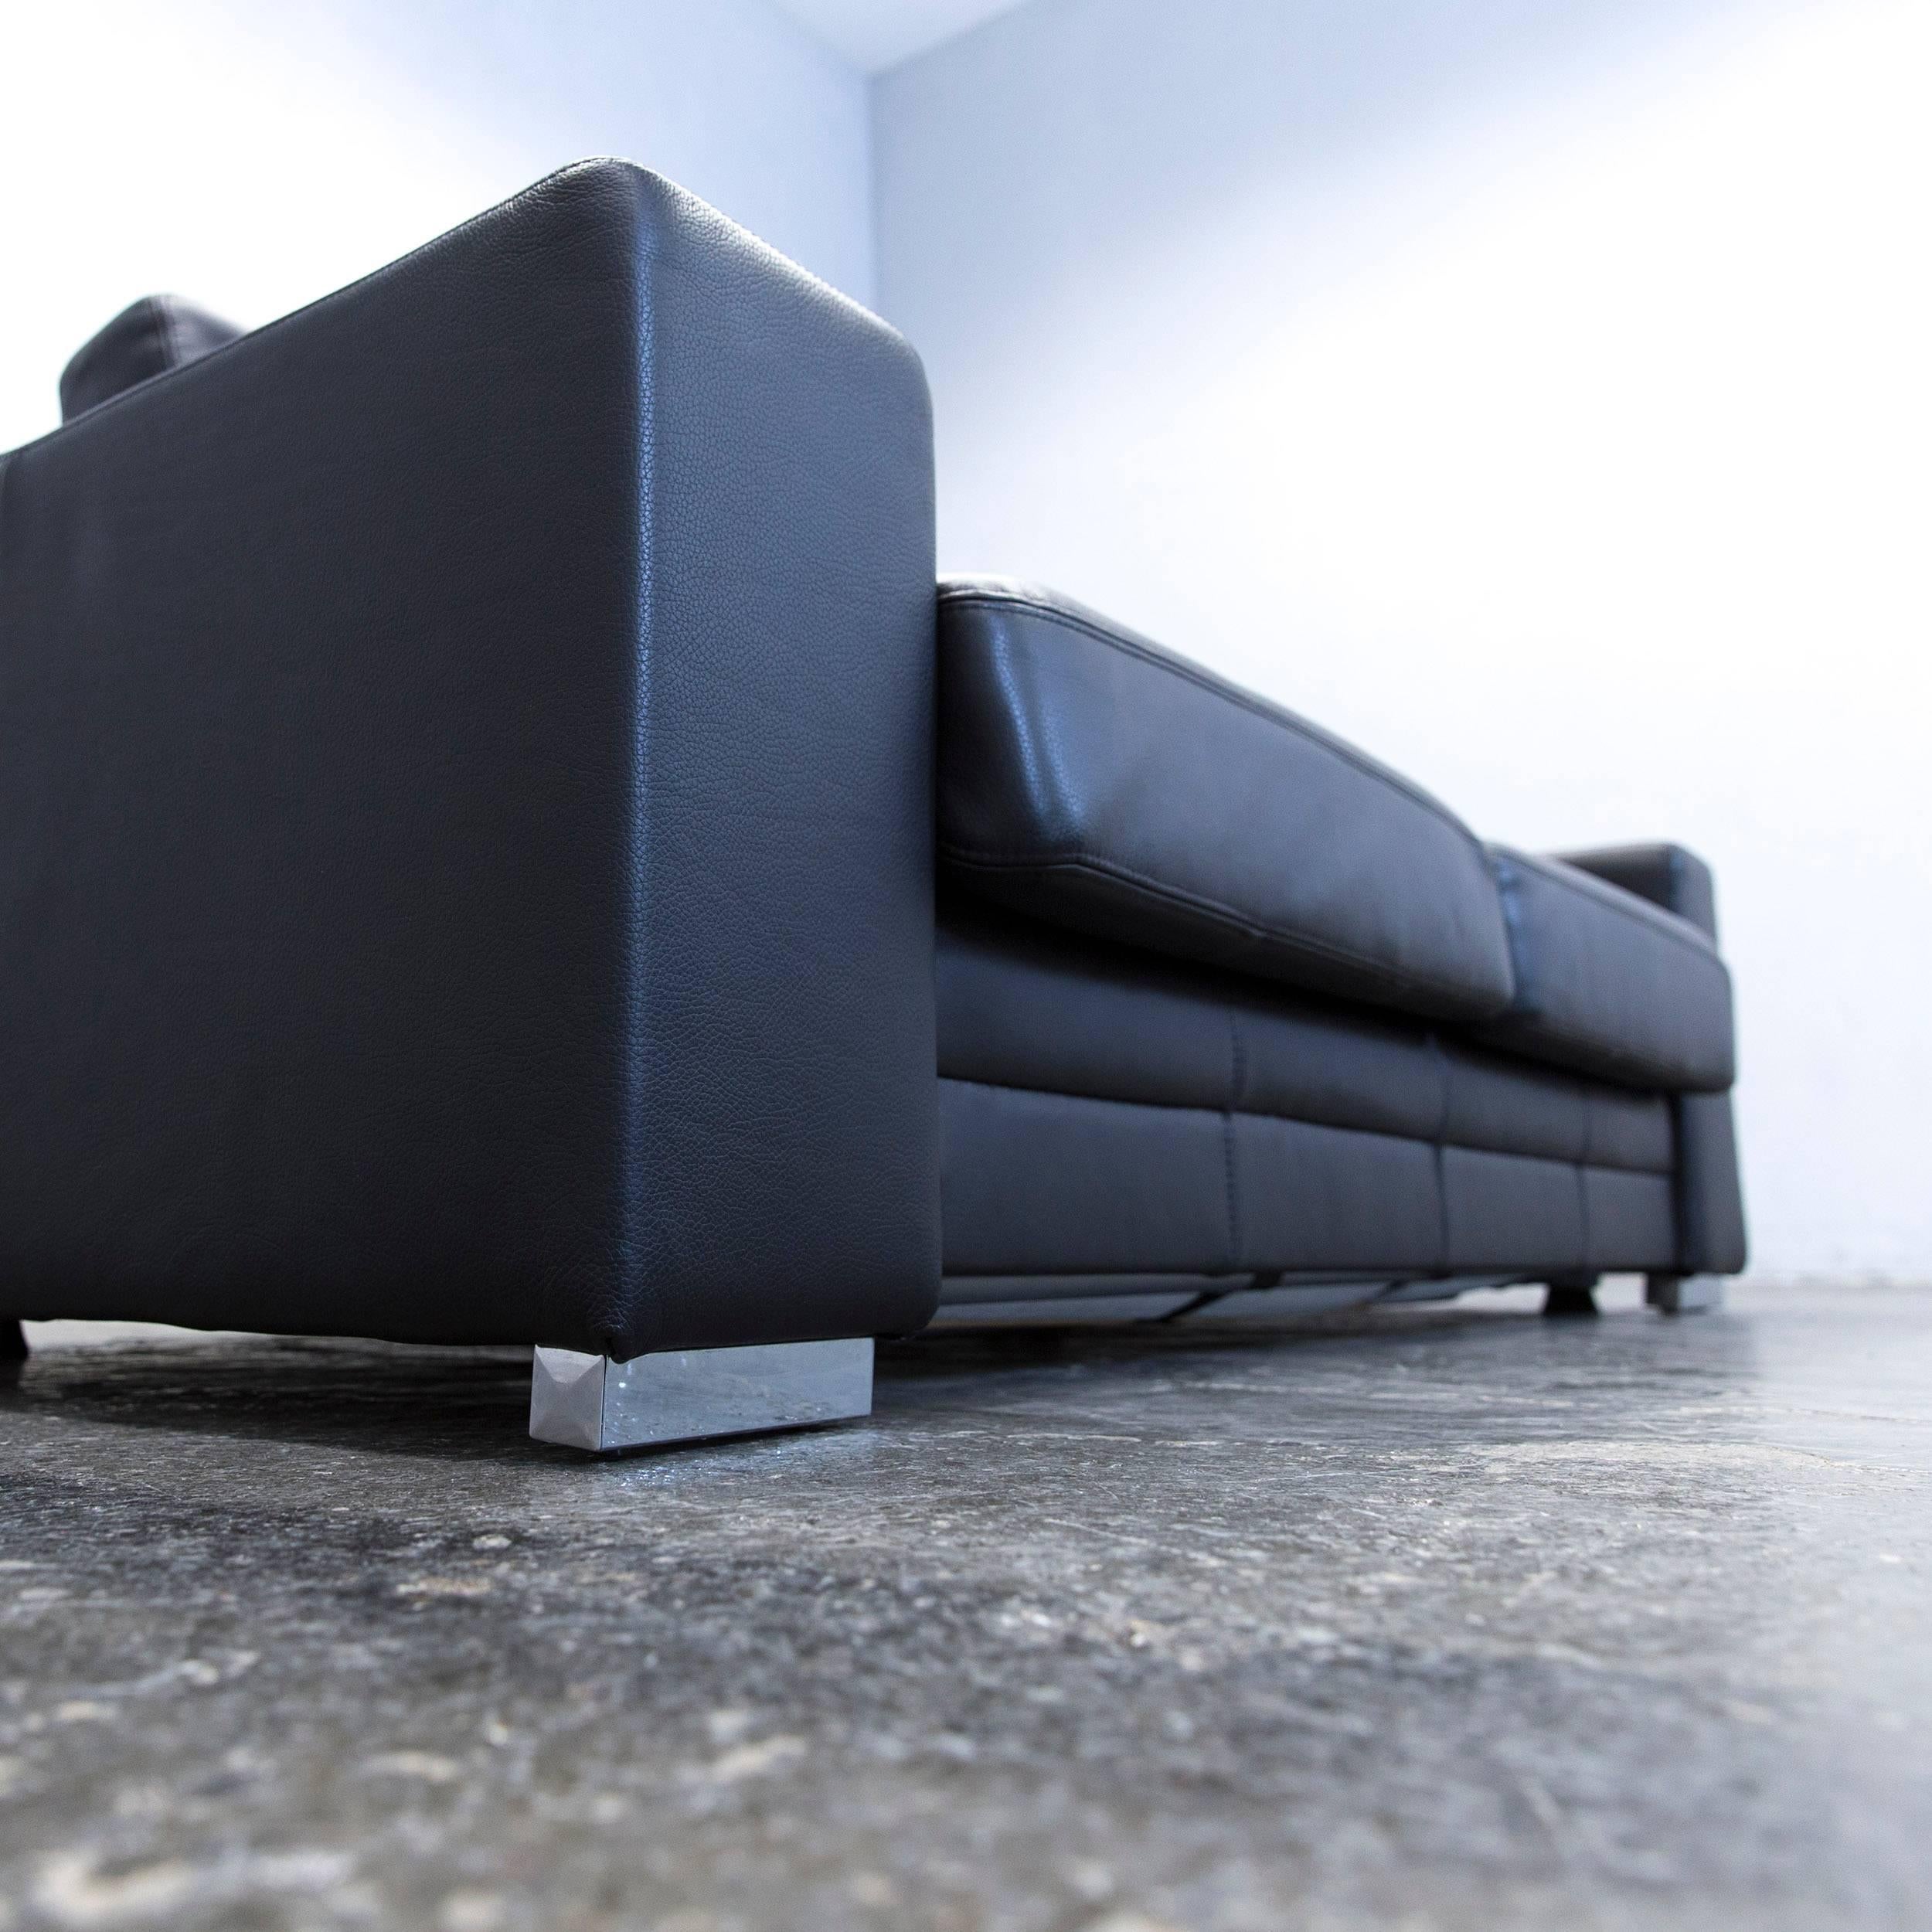 Designer Sleepsofa Set Leather Black Function Couch Topper Modern Footstool 1